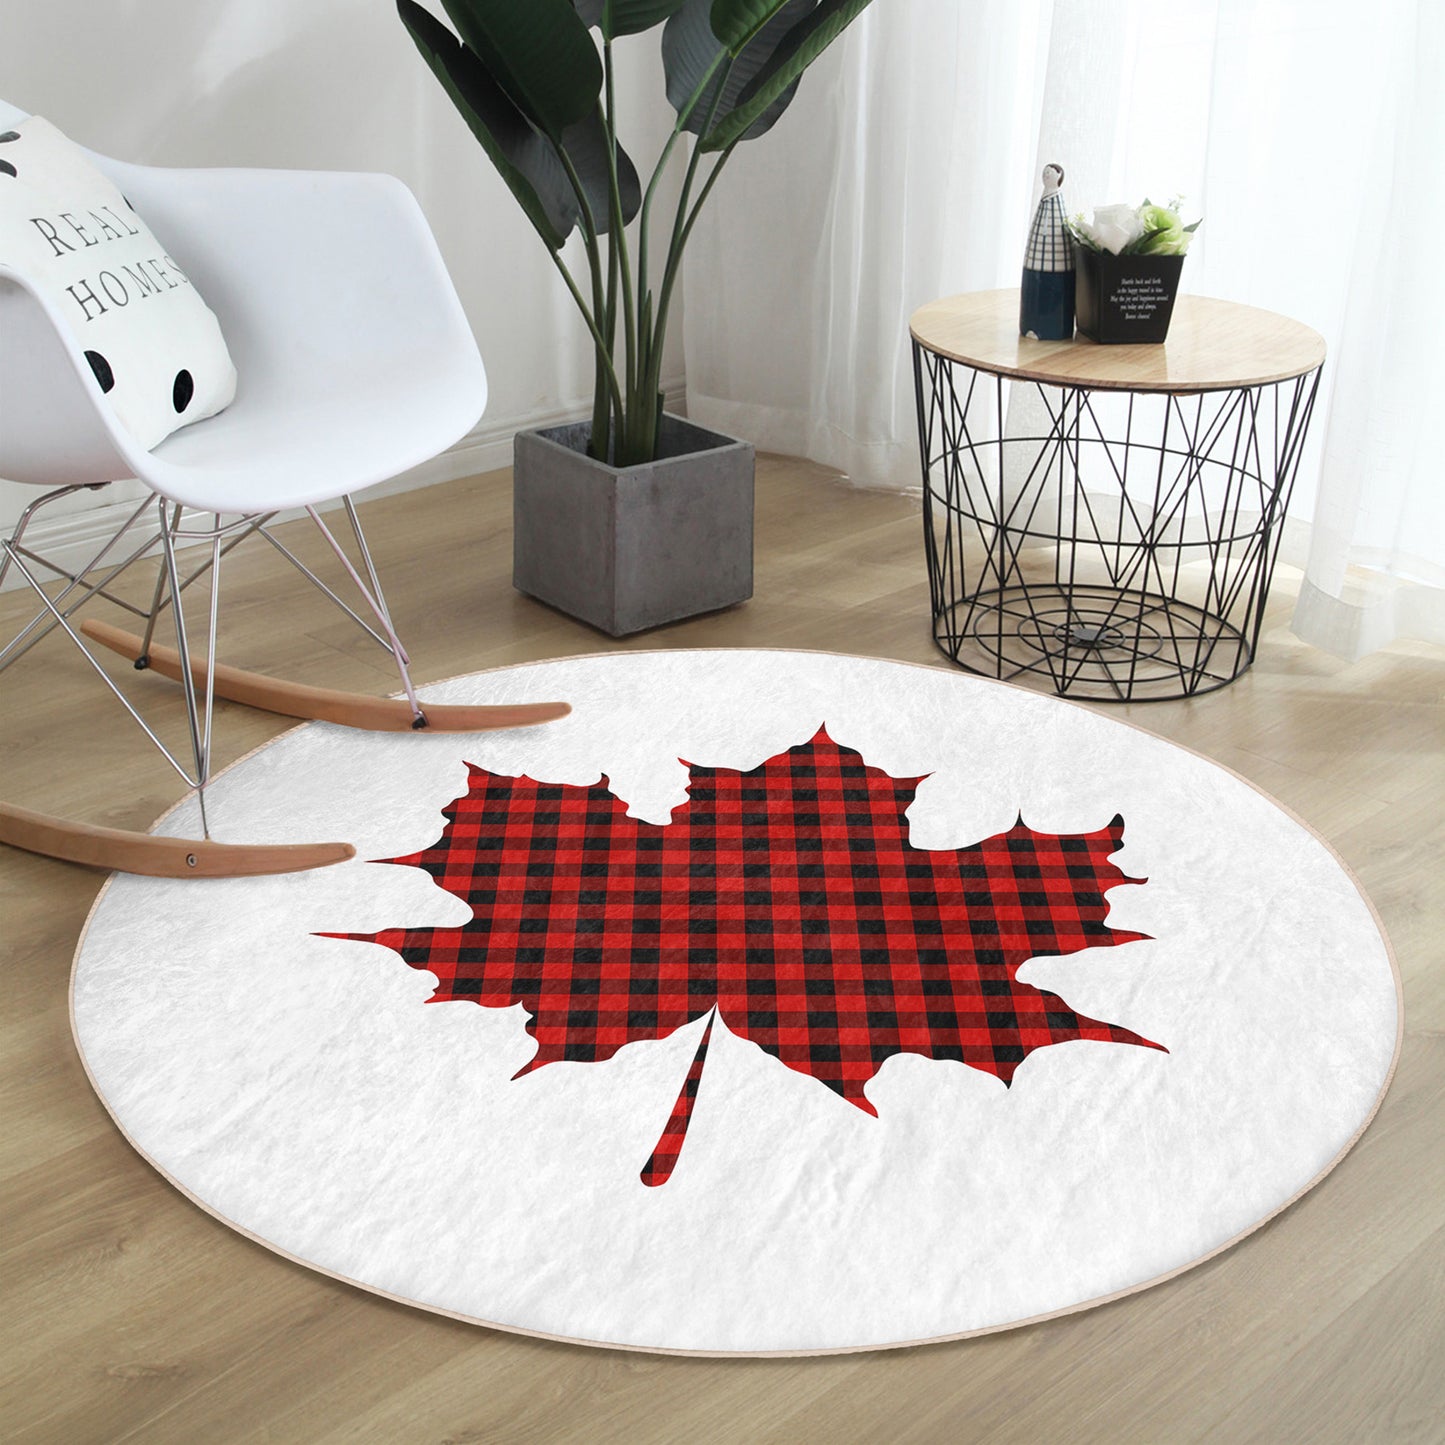 Round Patterned Floor Rug - Versatile Home Decor